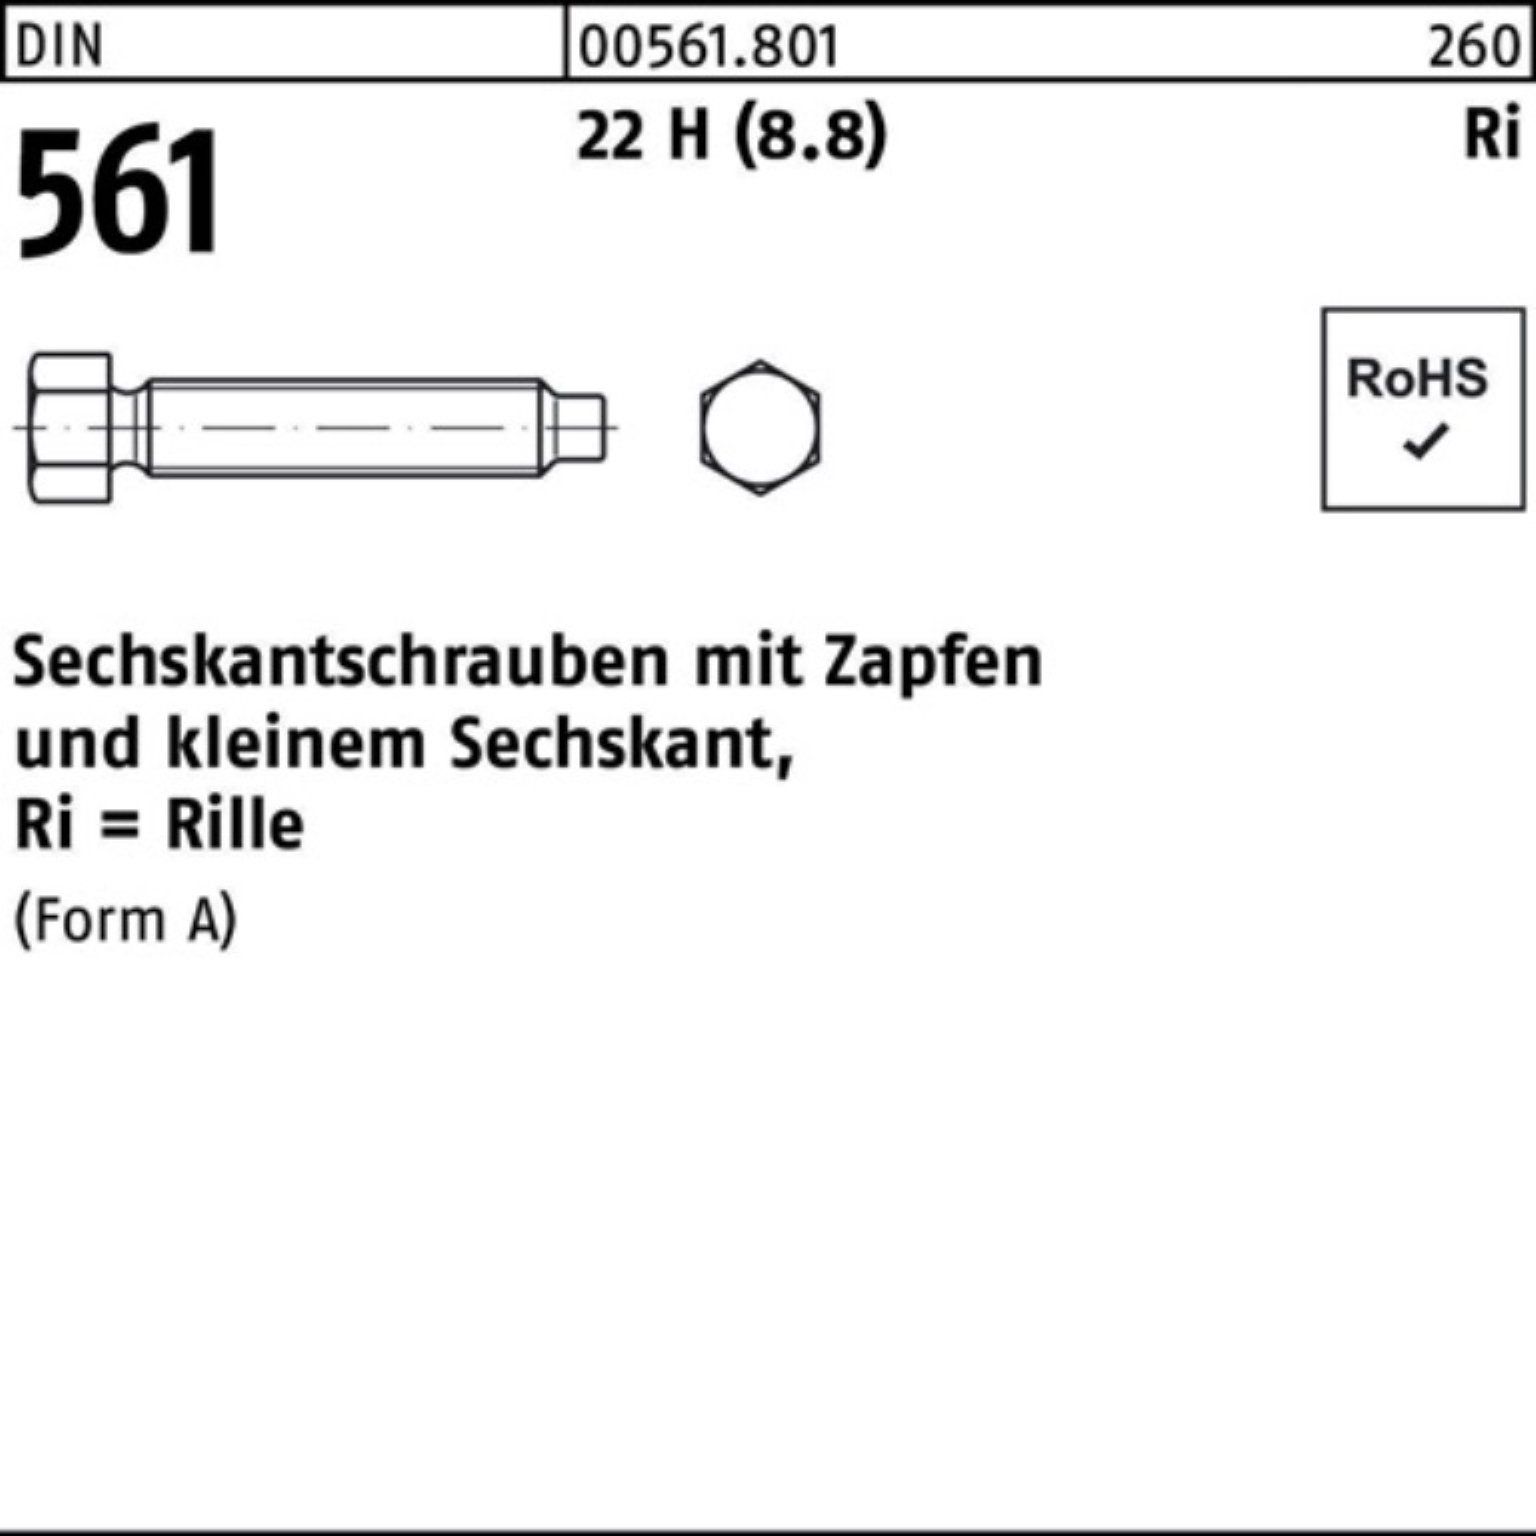 Reyher Sechskantschraube 100er Pack Sechskantschraube DIN 561 Zapfen AM 16x 40 22 H (8.8) 25 St